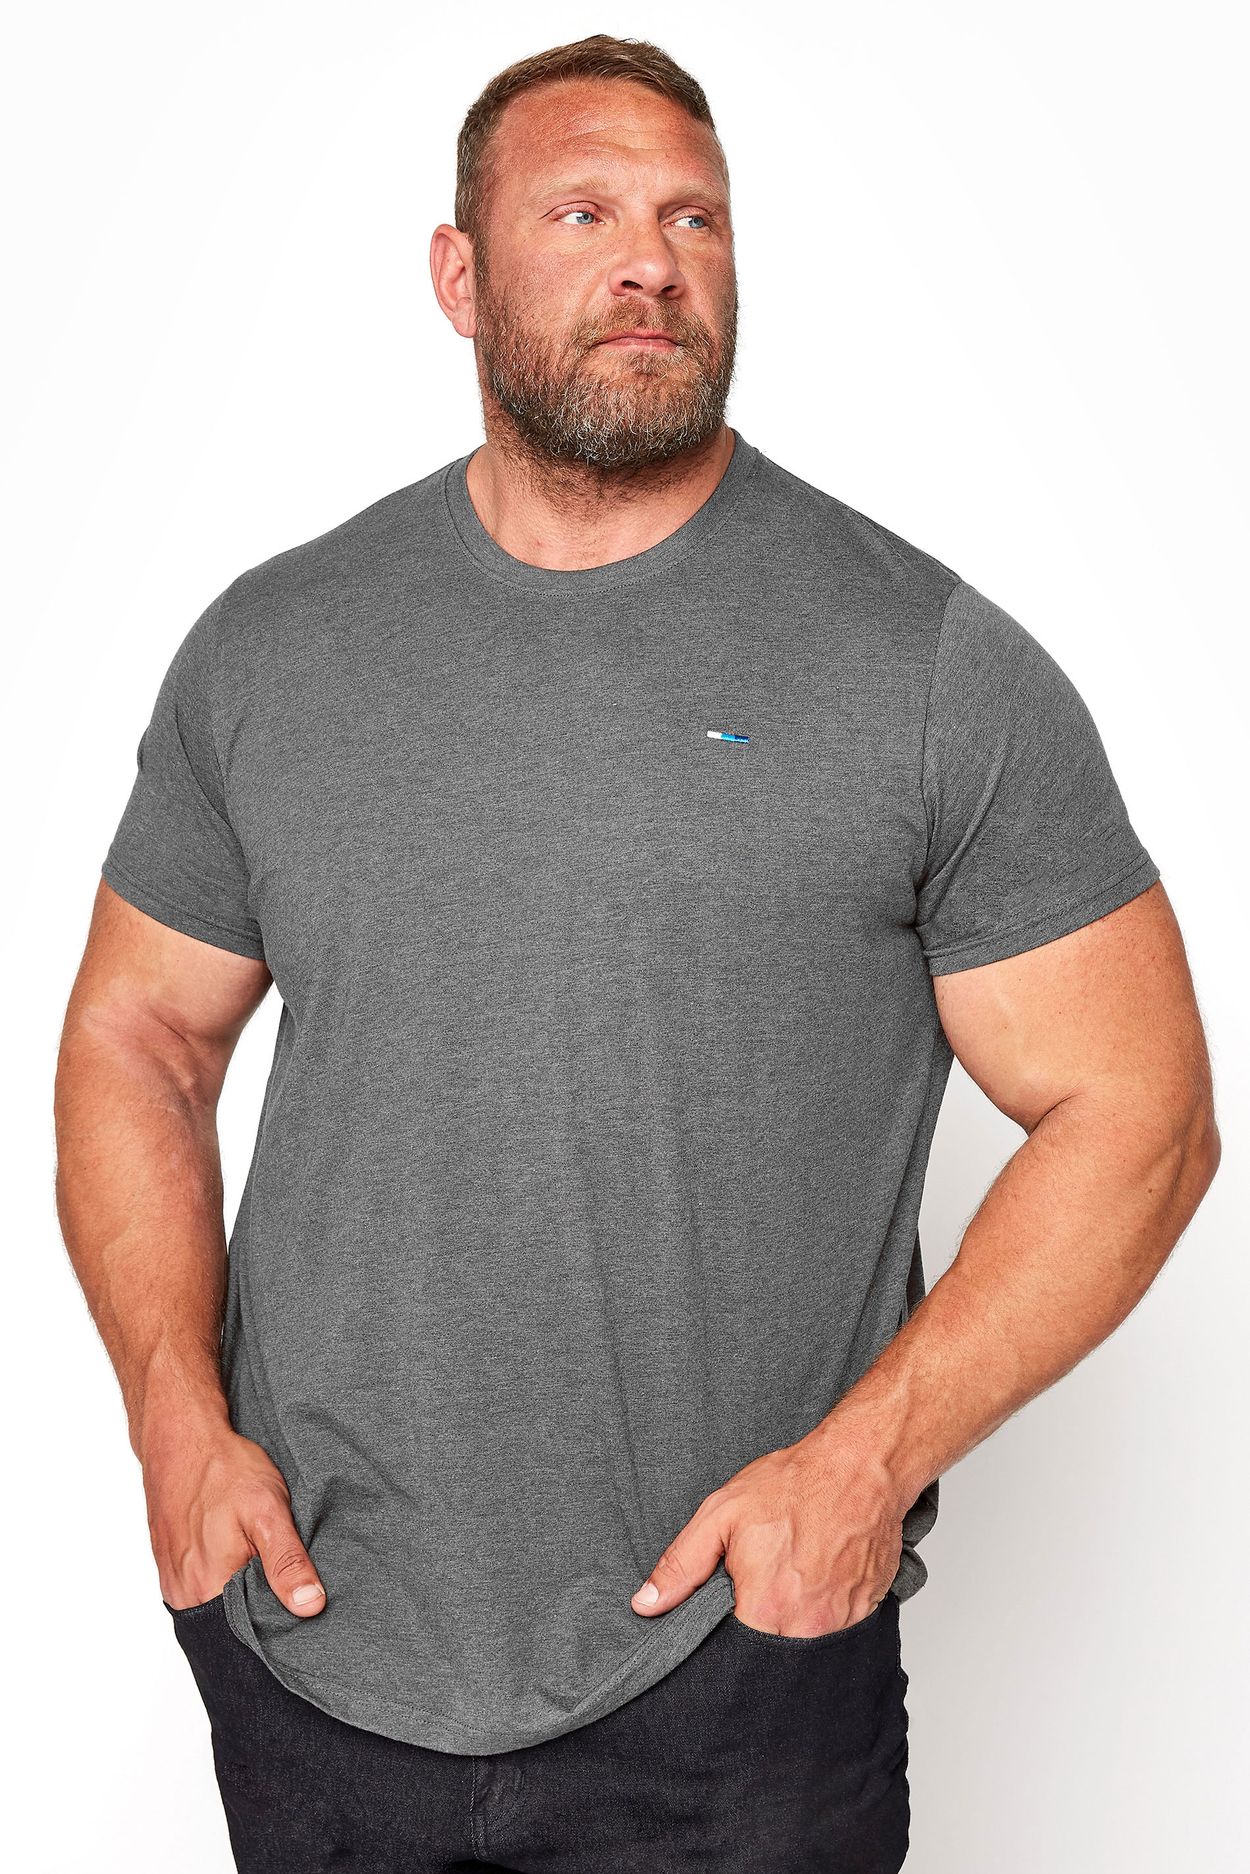 https://time.com/shopping/static/7df0daf464c22174bfca3bd844aae365/76902/BadRhino_Big-and-Tall-Mens-Workout-Shirt.jpg